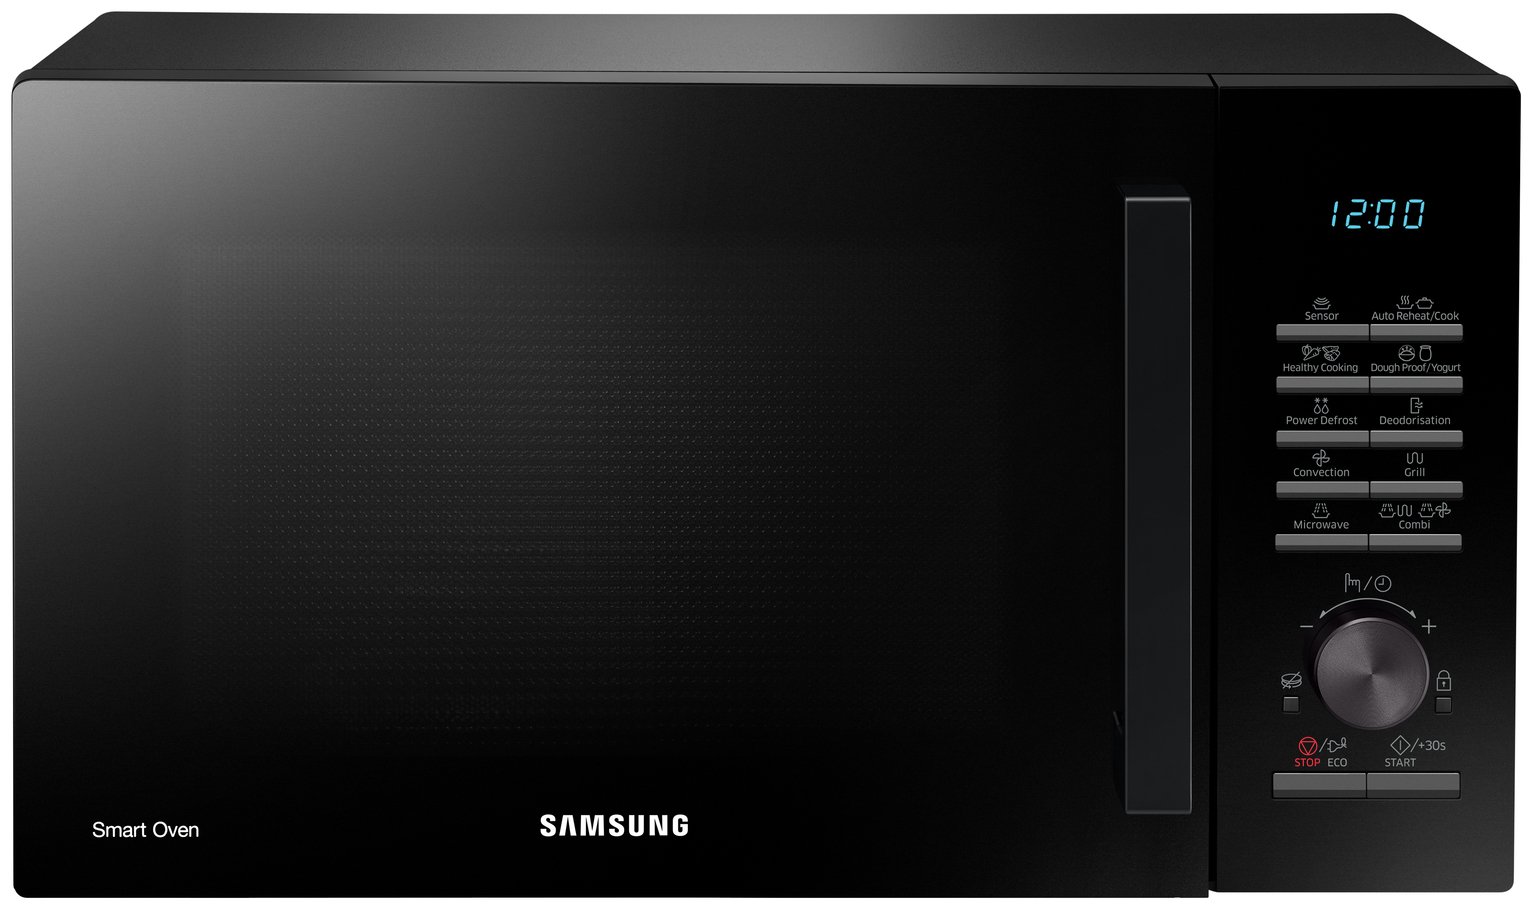 Samsung 900W 28L Combination Microwave - Black